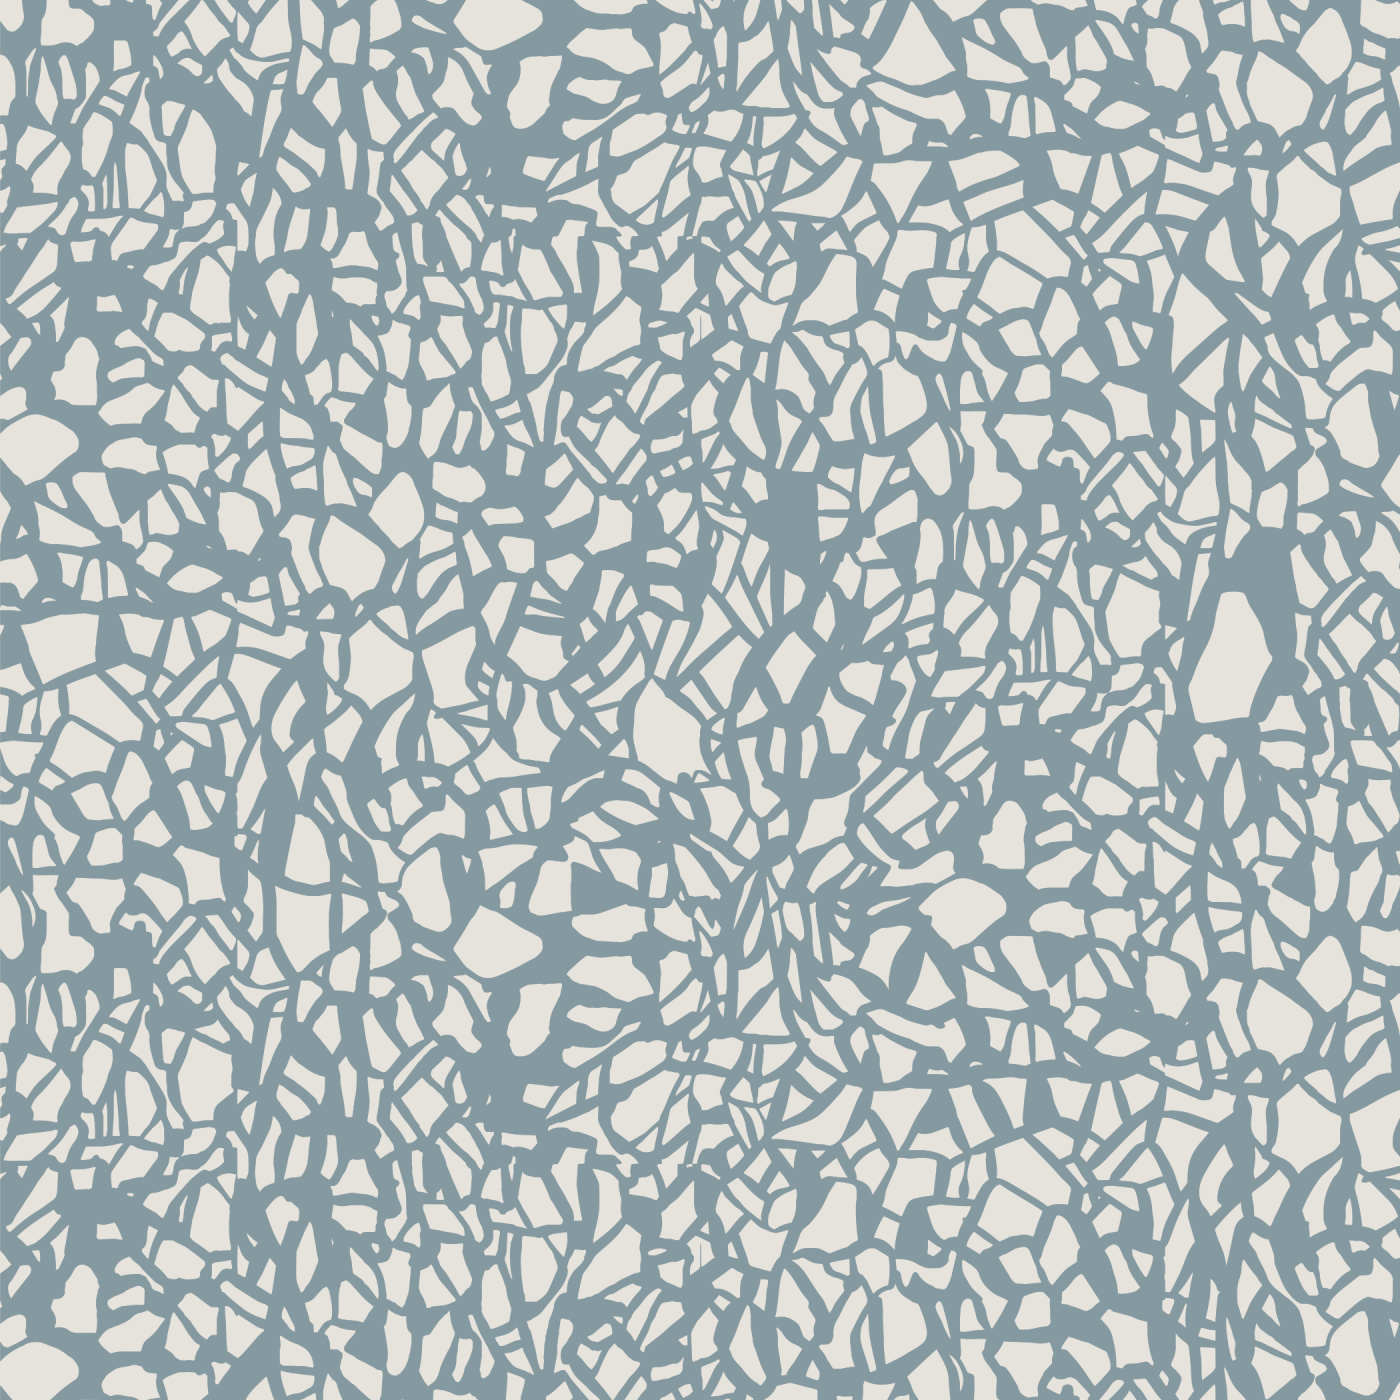 Crackle Texture Wallpaper